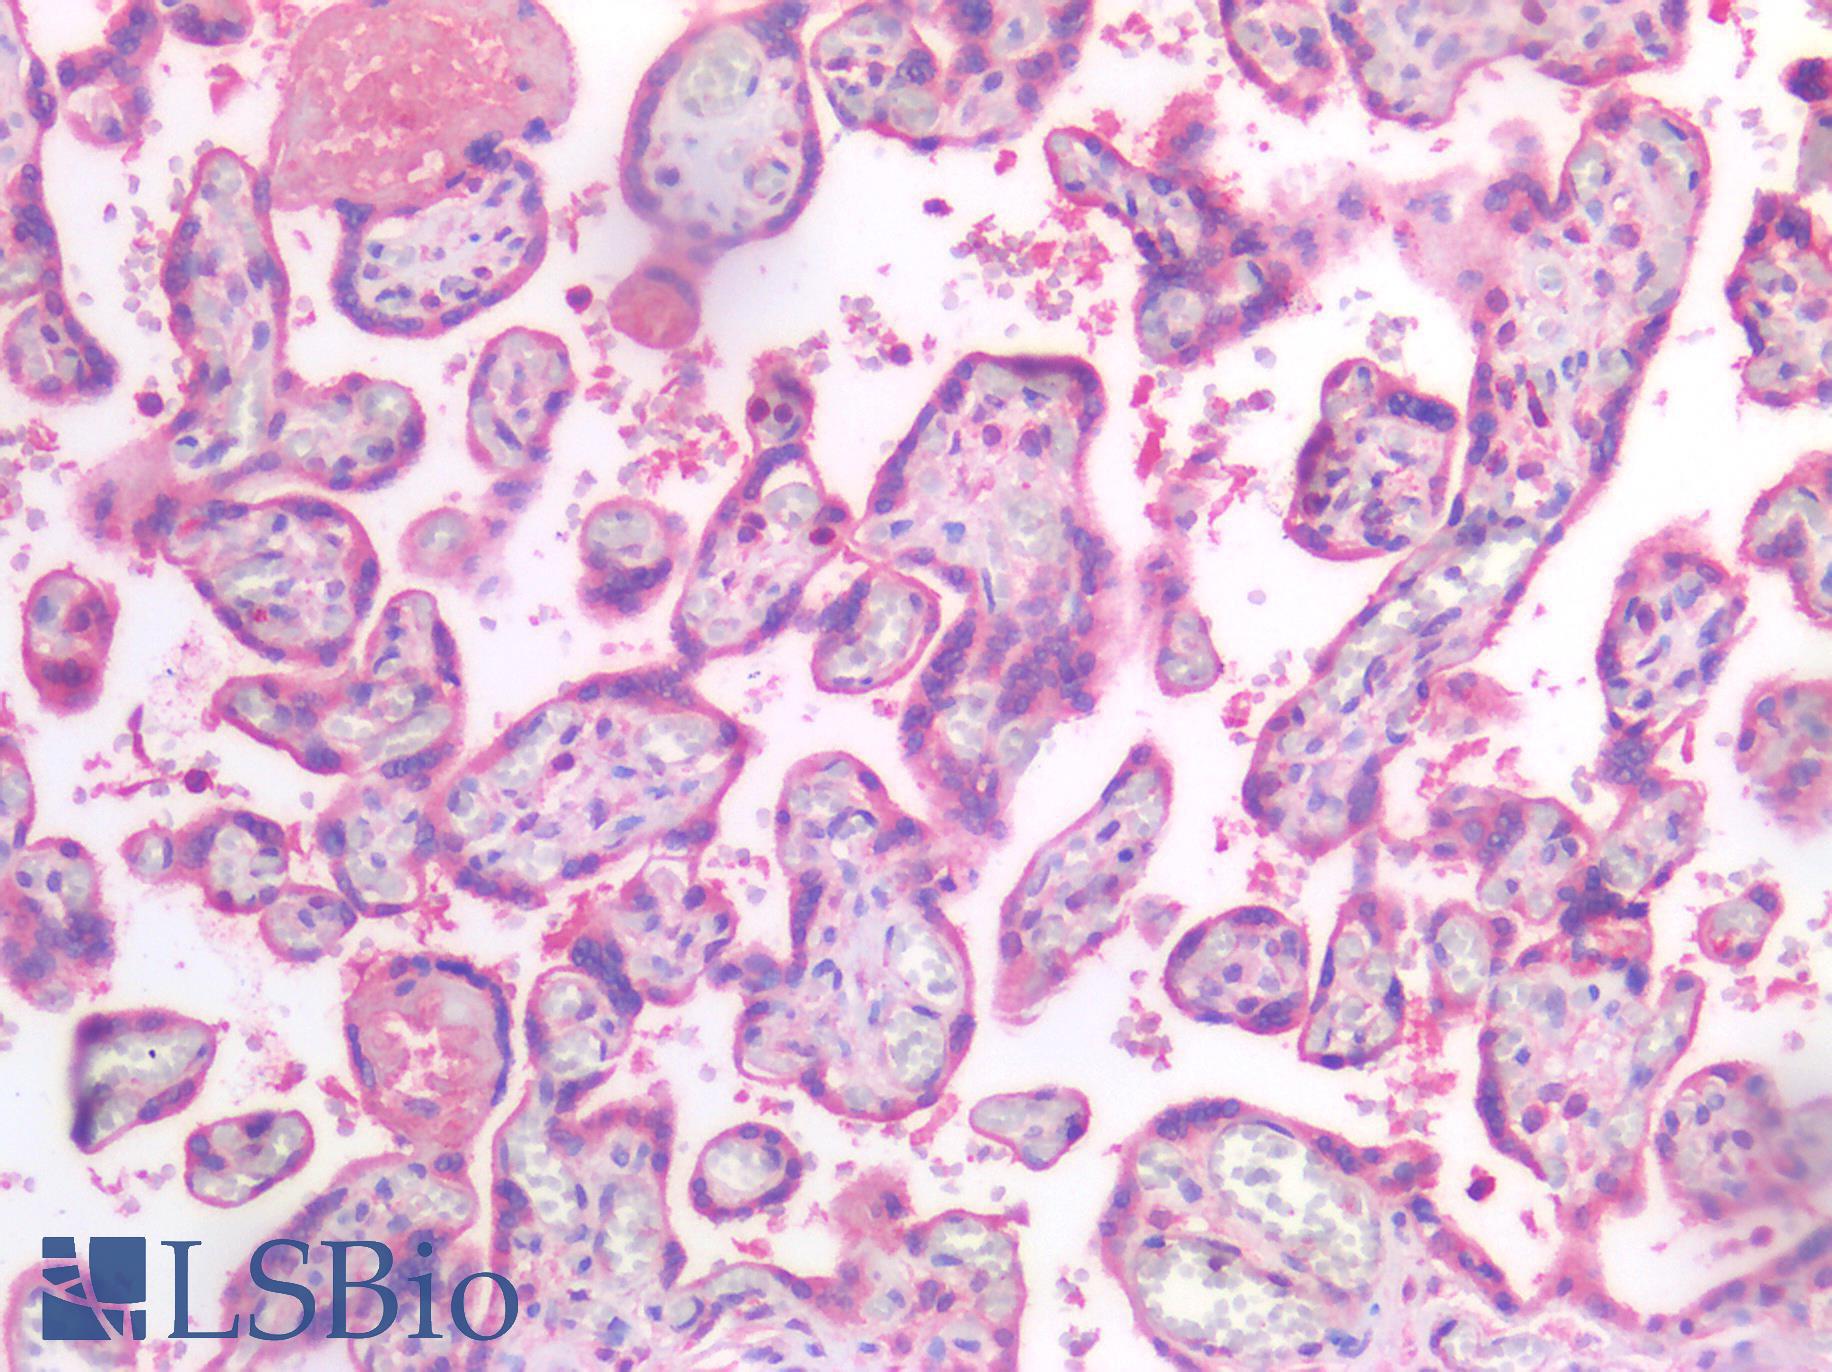 MMP2 Antibody - Human Placenta: Formalin-Fixed, Paraffin-Embedded (FFPE)